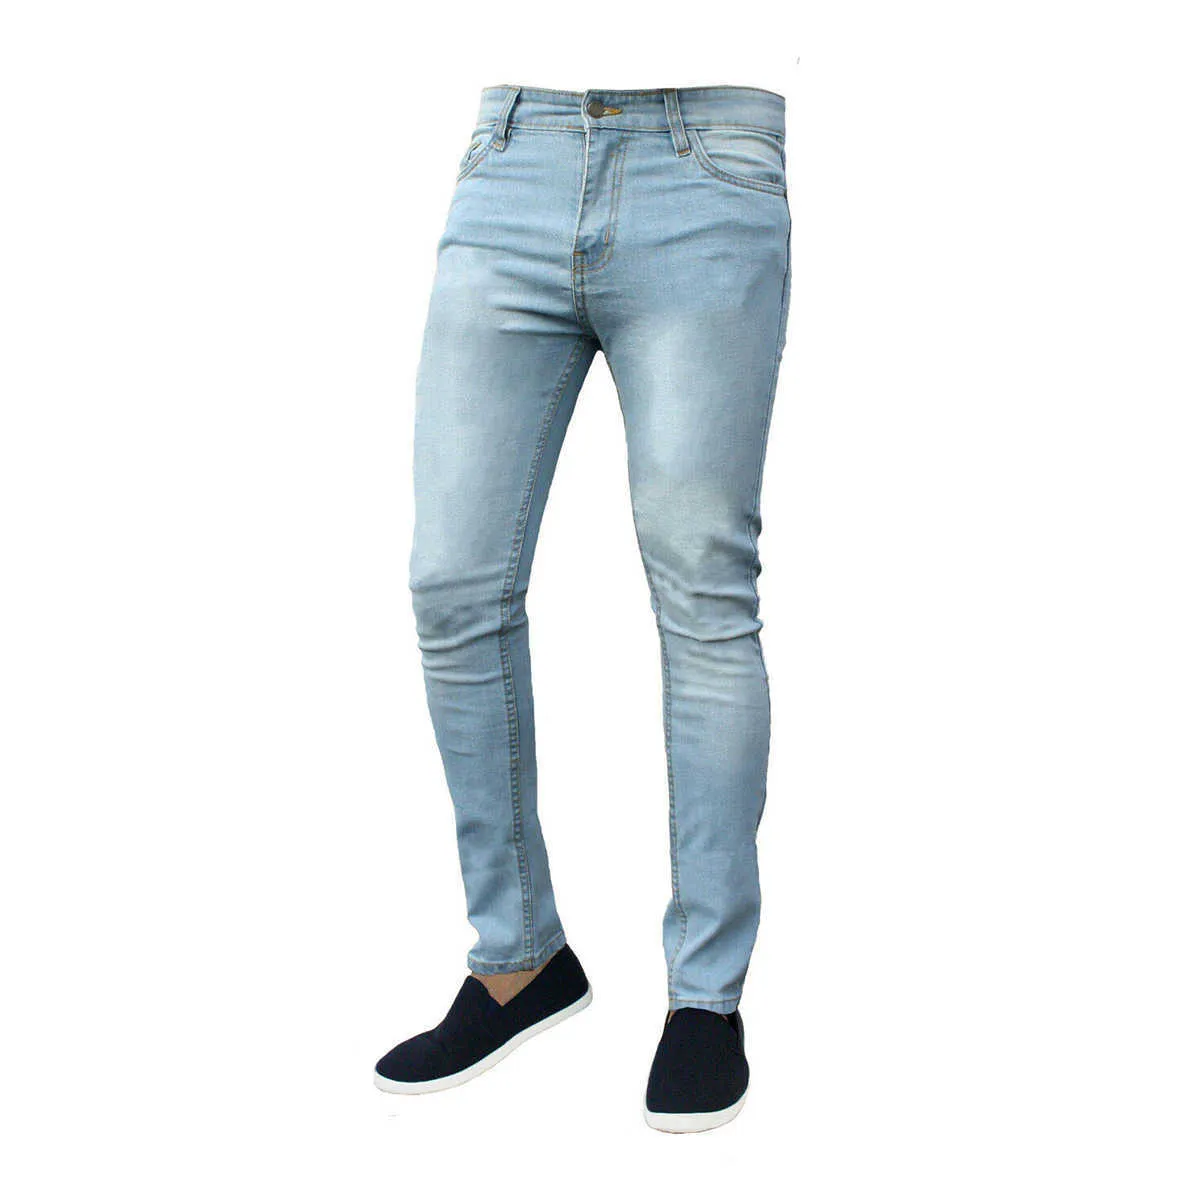 Men s Basic Pencil Jeans, Solid Color High Waist Pencil Pants Close-Fitting Denim Trousers for Boys, Dark Blue/Light Blue/Black X0621